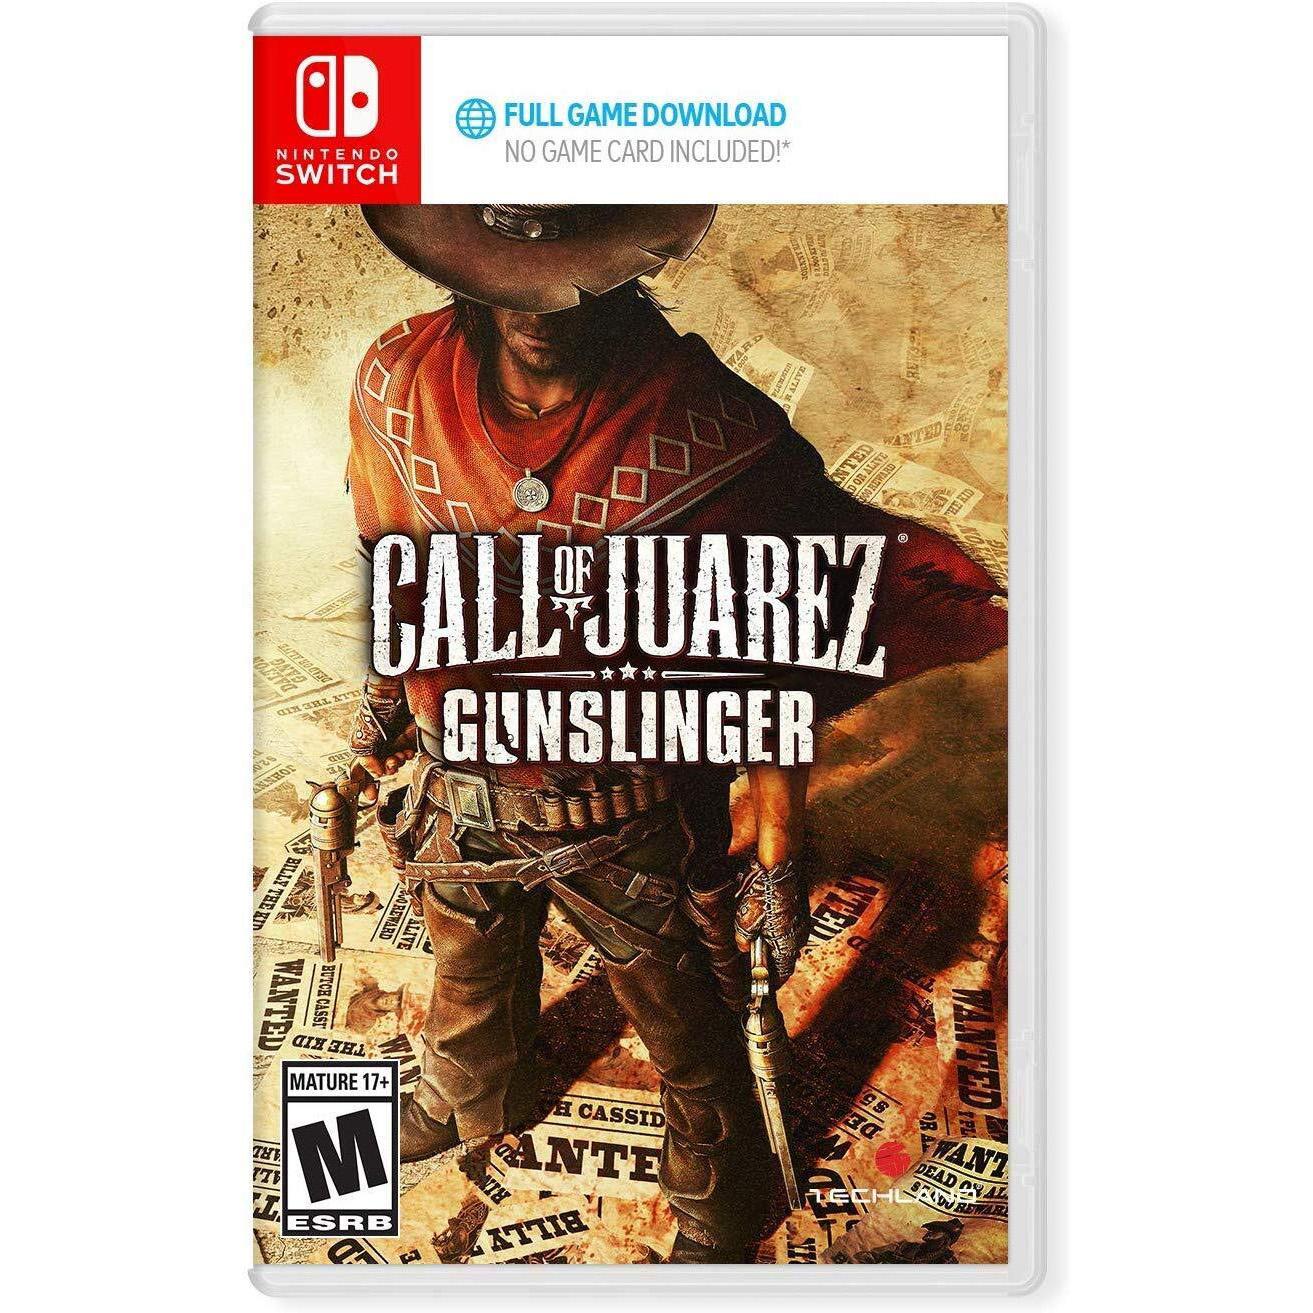 Call of Juarez Gunslinger Nintendo Switch for $9.99